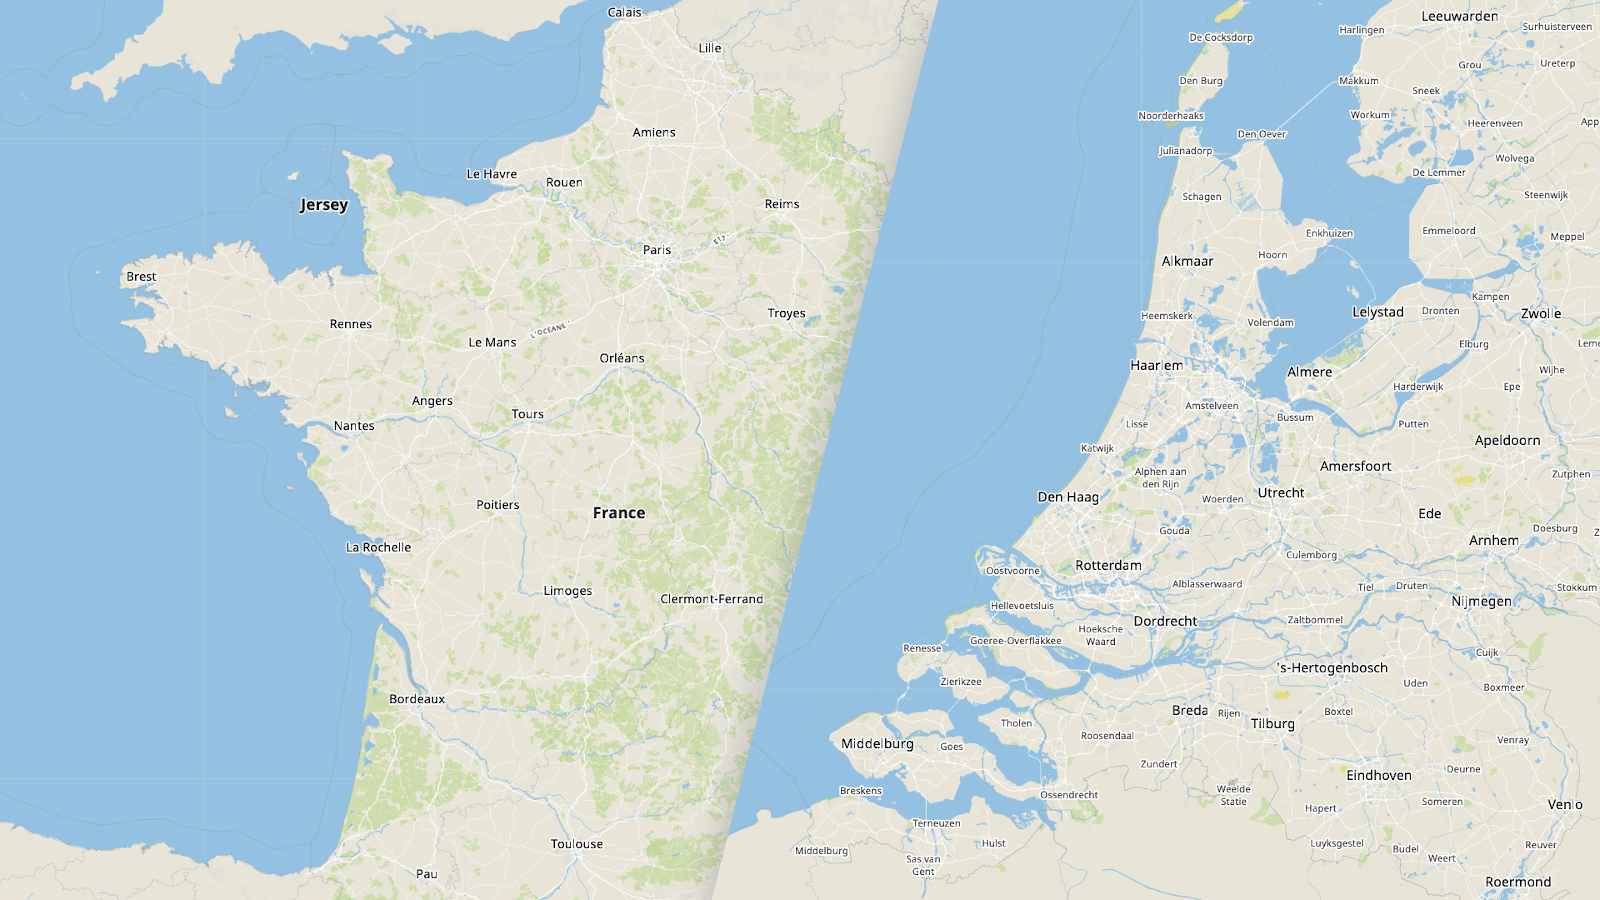 OpenStreetMap in French Lambert and Dutch Rijksdriehoekstelsel map projections